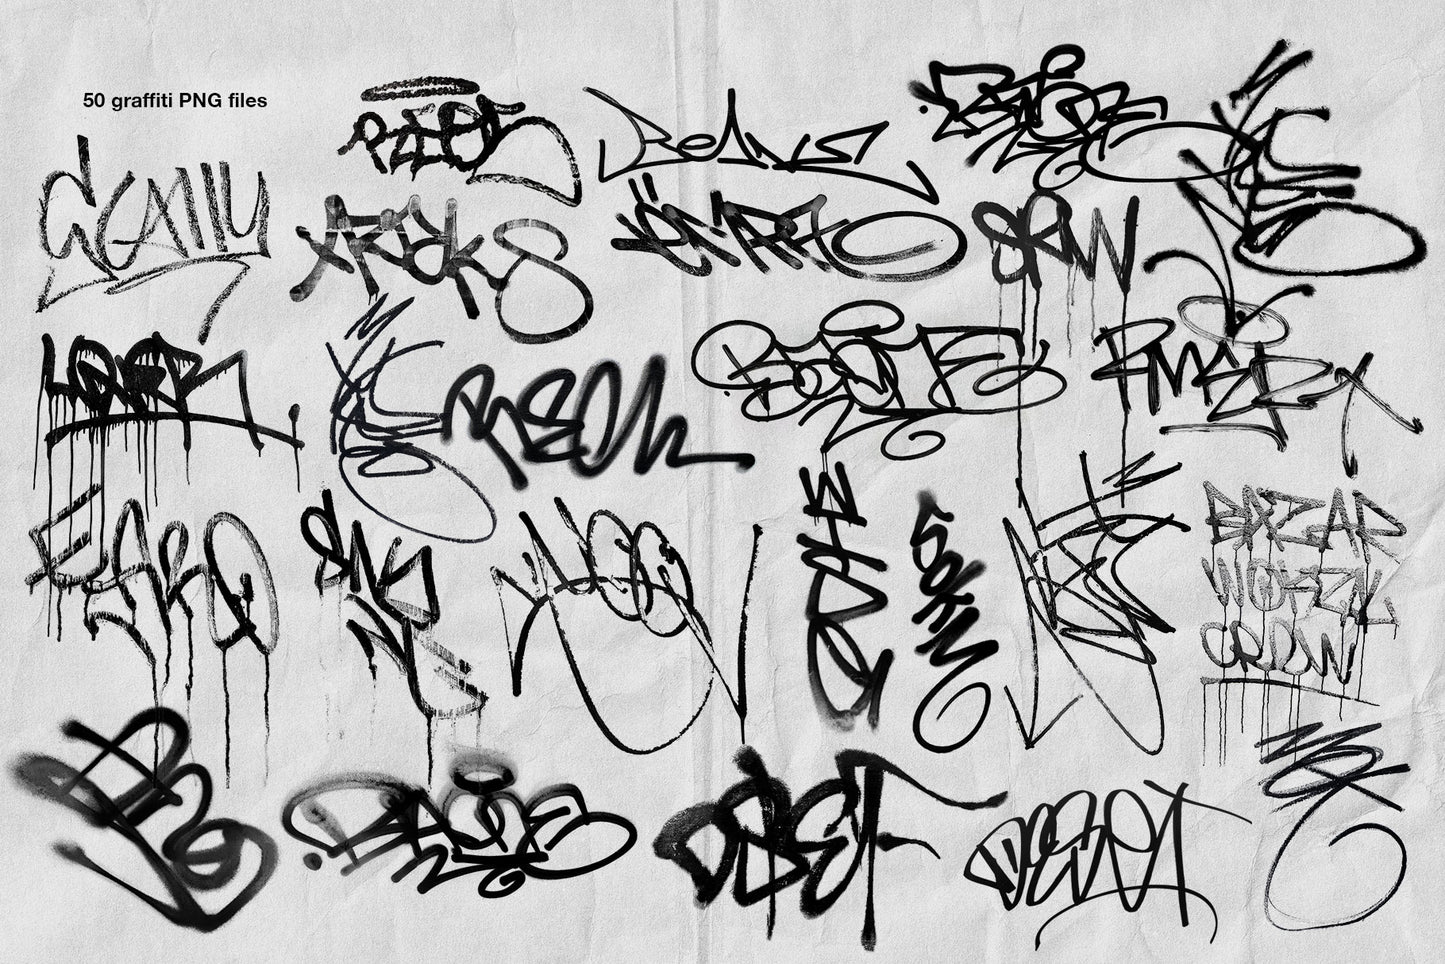 Graffiti & Torn Paper vol.2